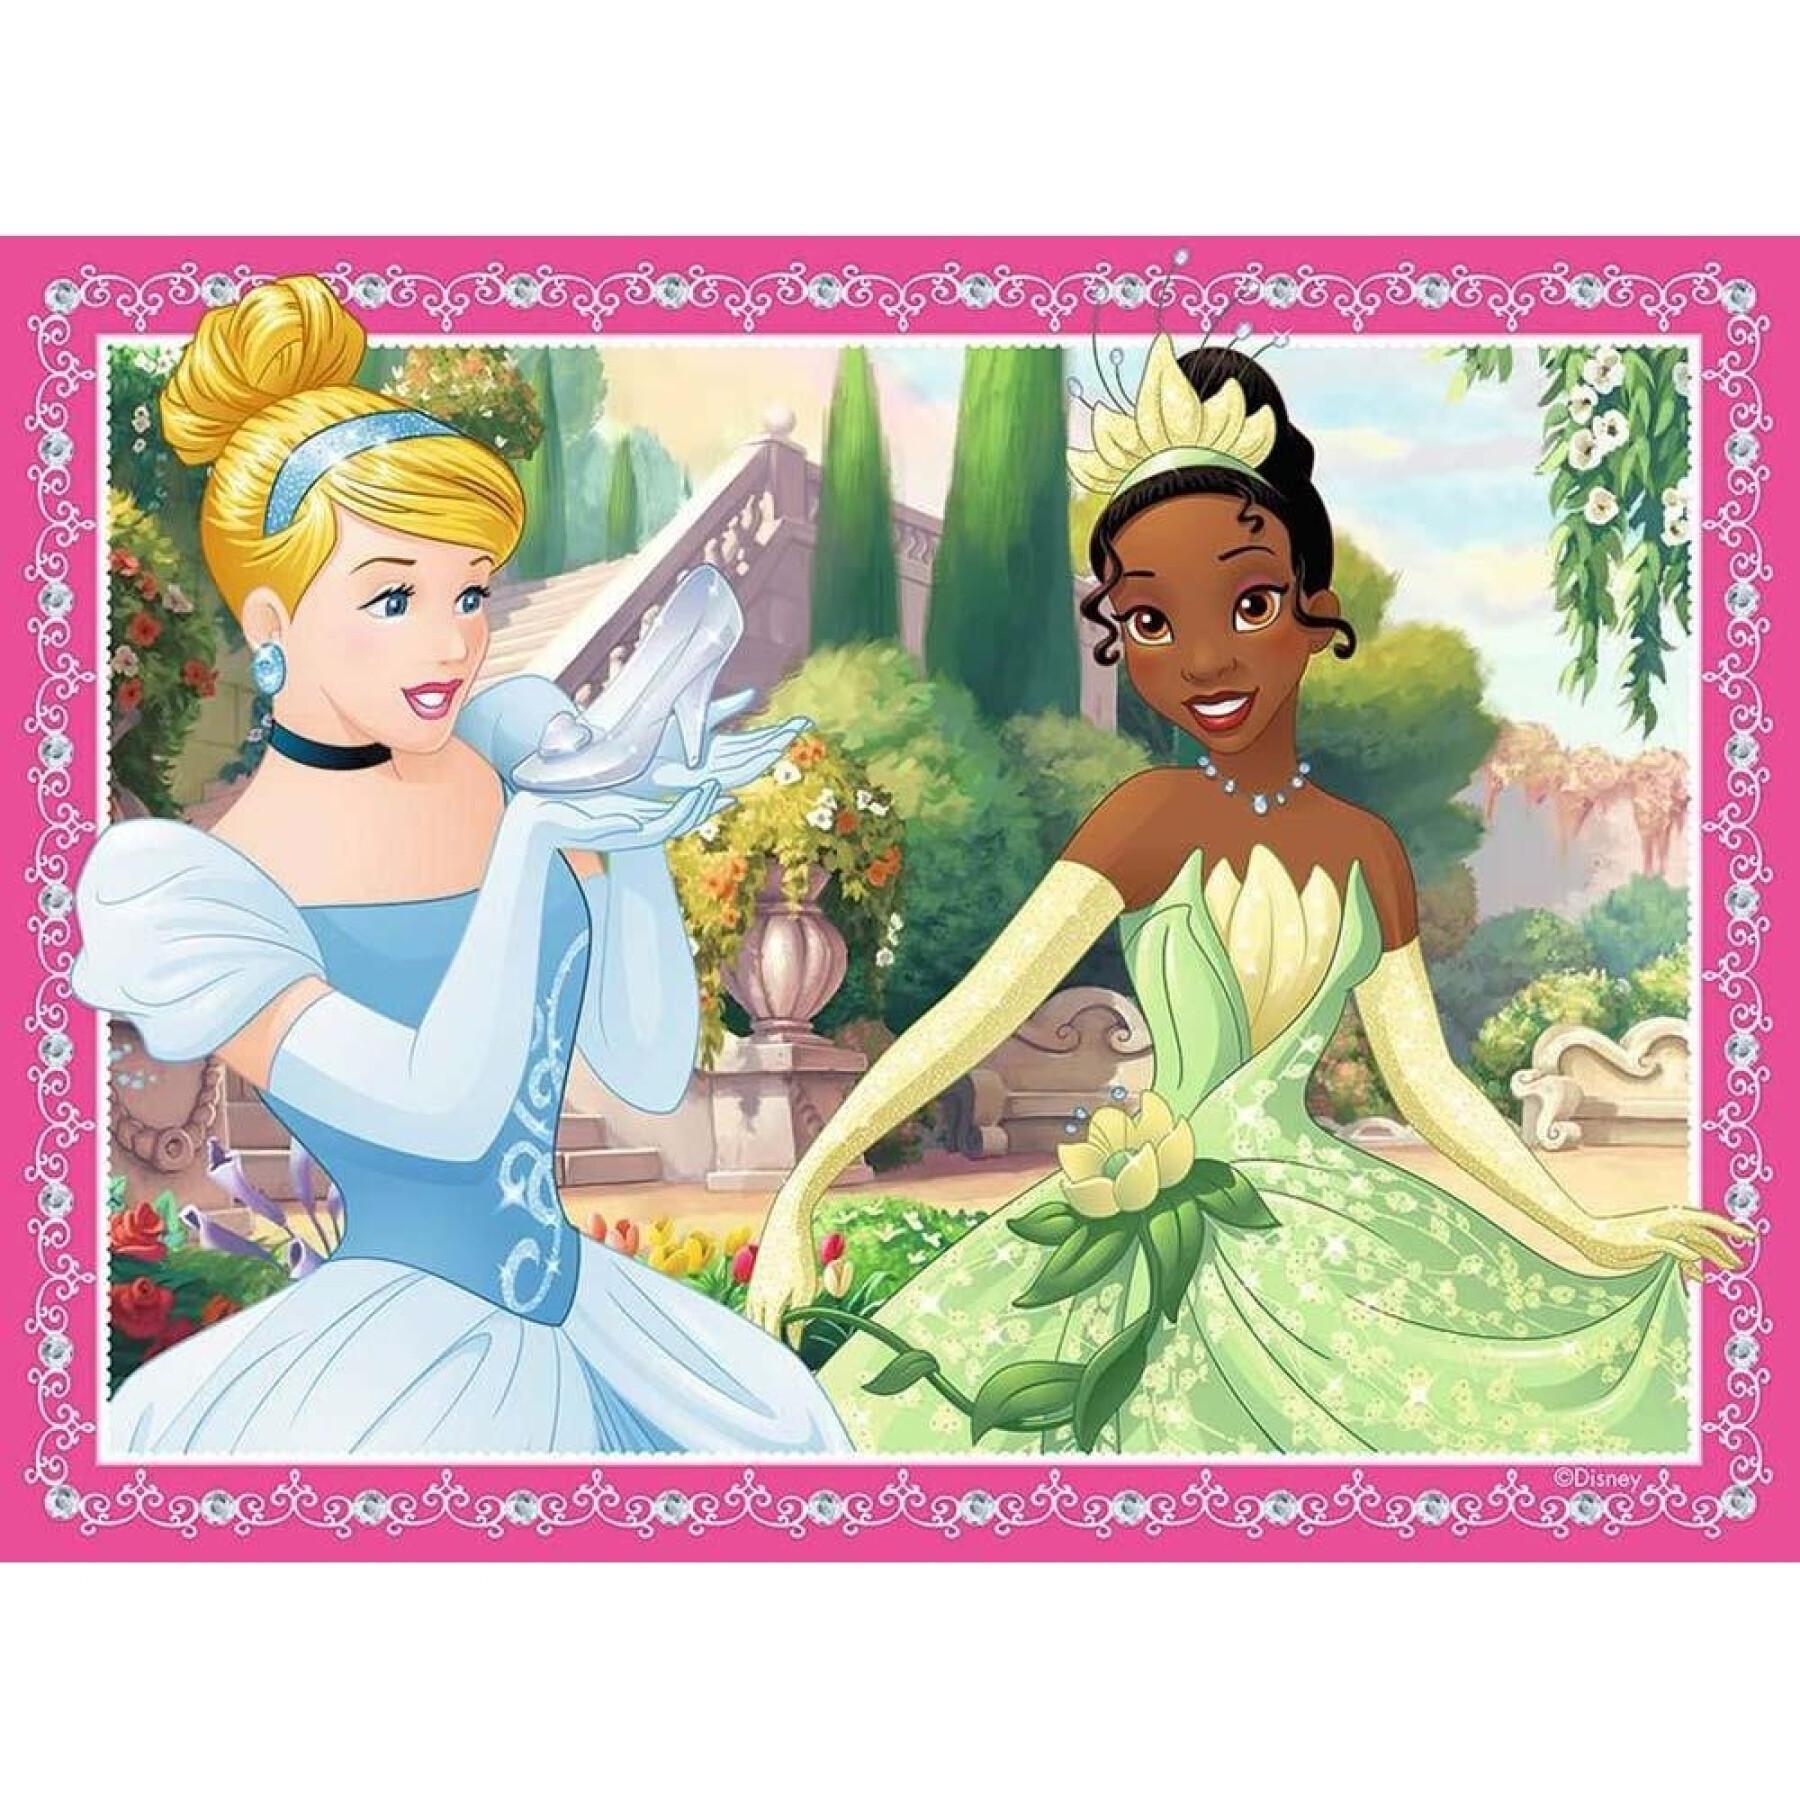 Puzzle da 4 pezzi x 1-12-16-20-24 pezzi Disney Princess